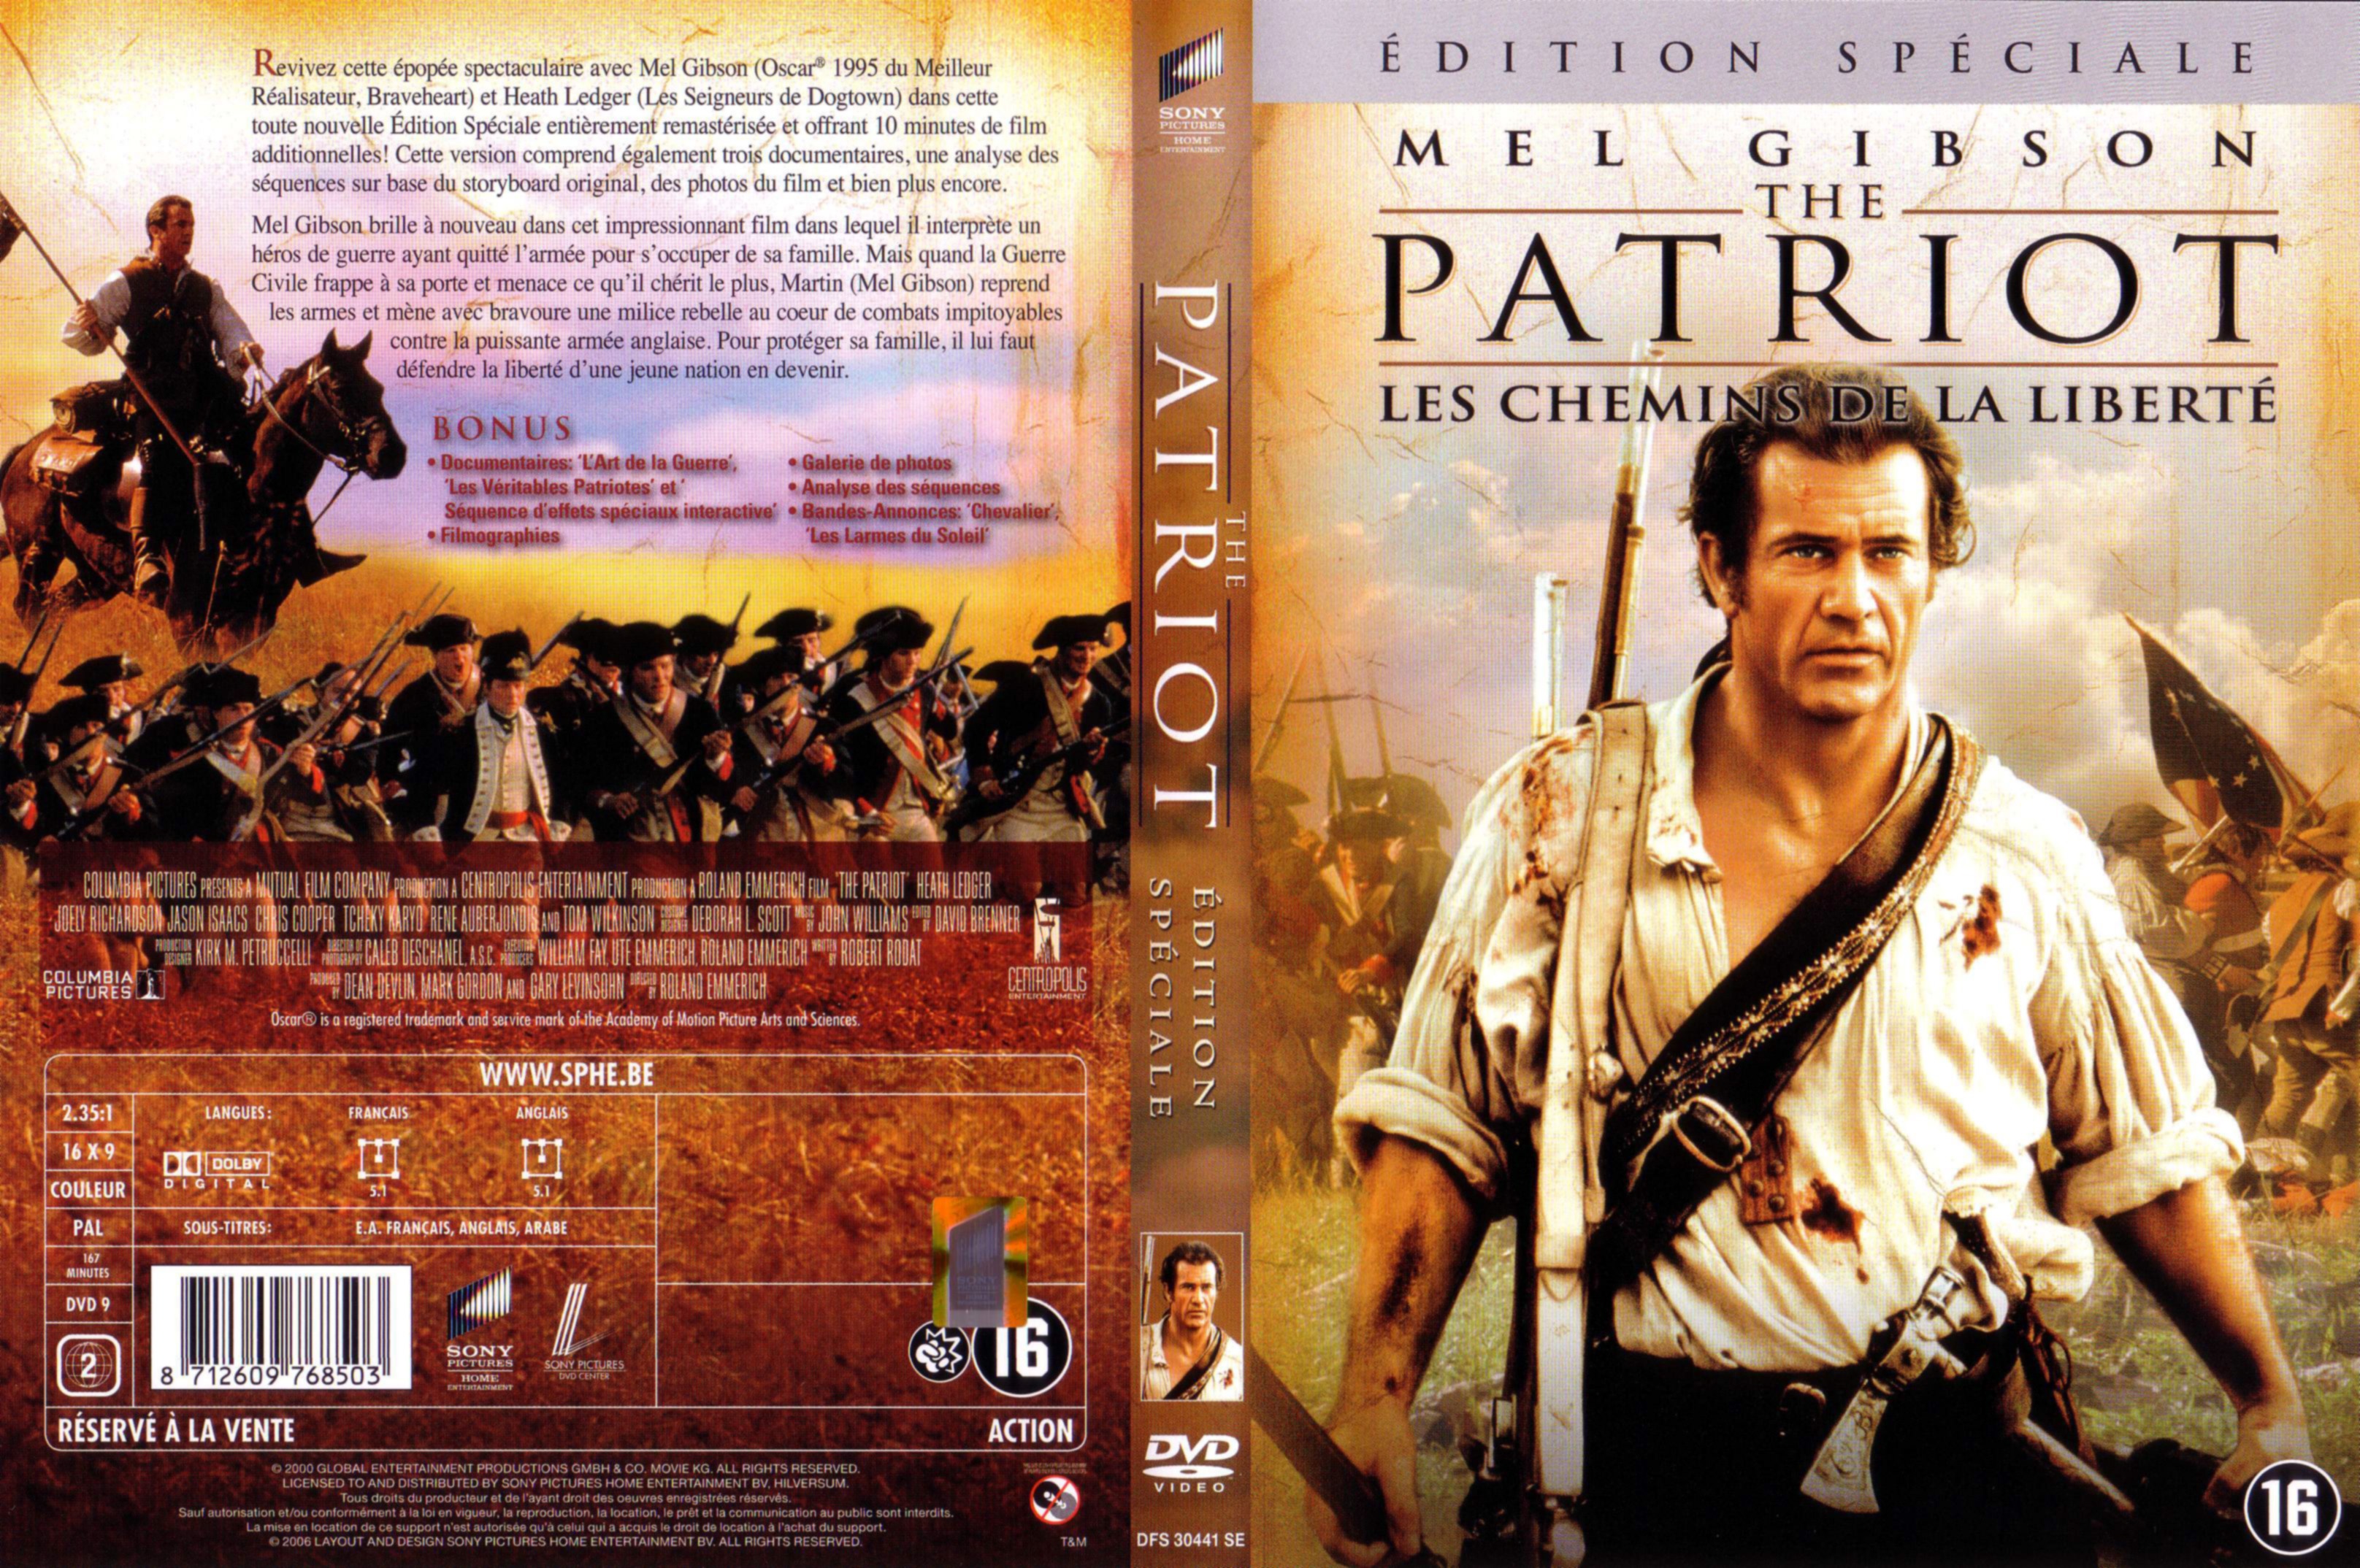 Jaquette DVD The patriot v3